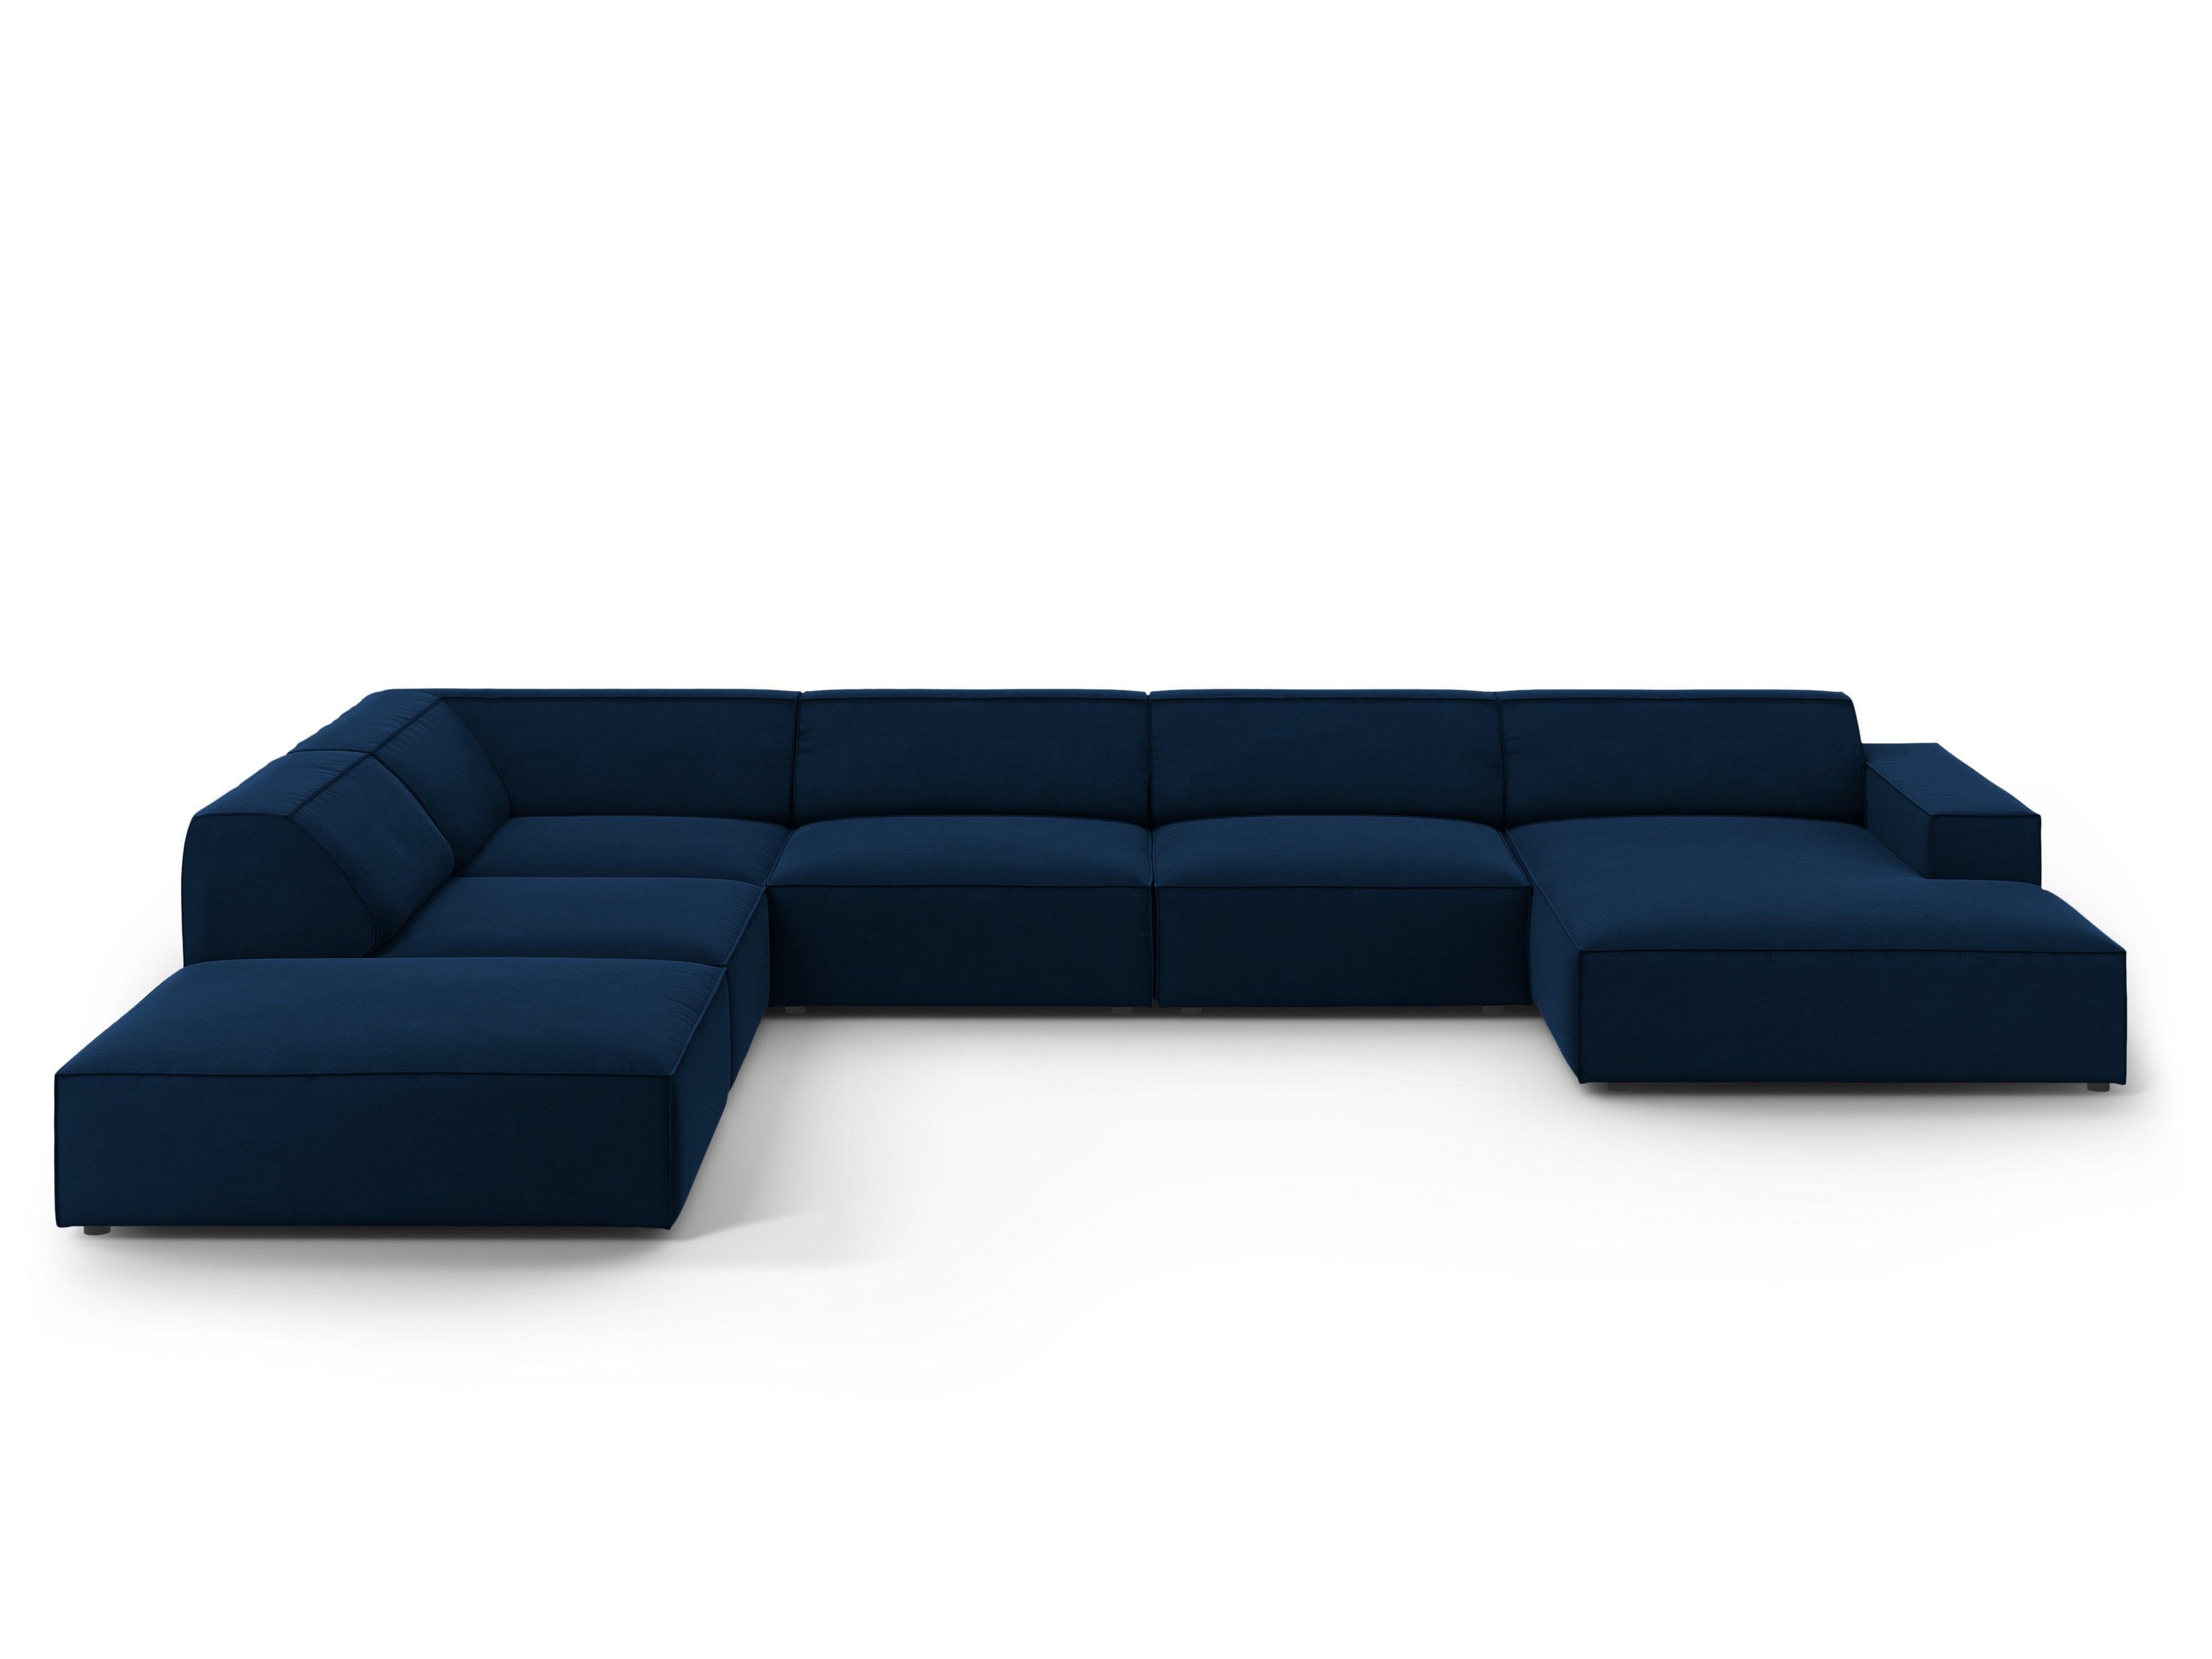 Velvet Panoramic Left Corner Sofa, "Jodie", 7 Seats, 364x262x70
Made in Europe, Micadoni, Eye on Design